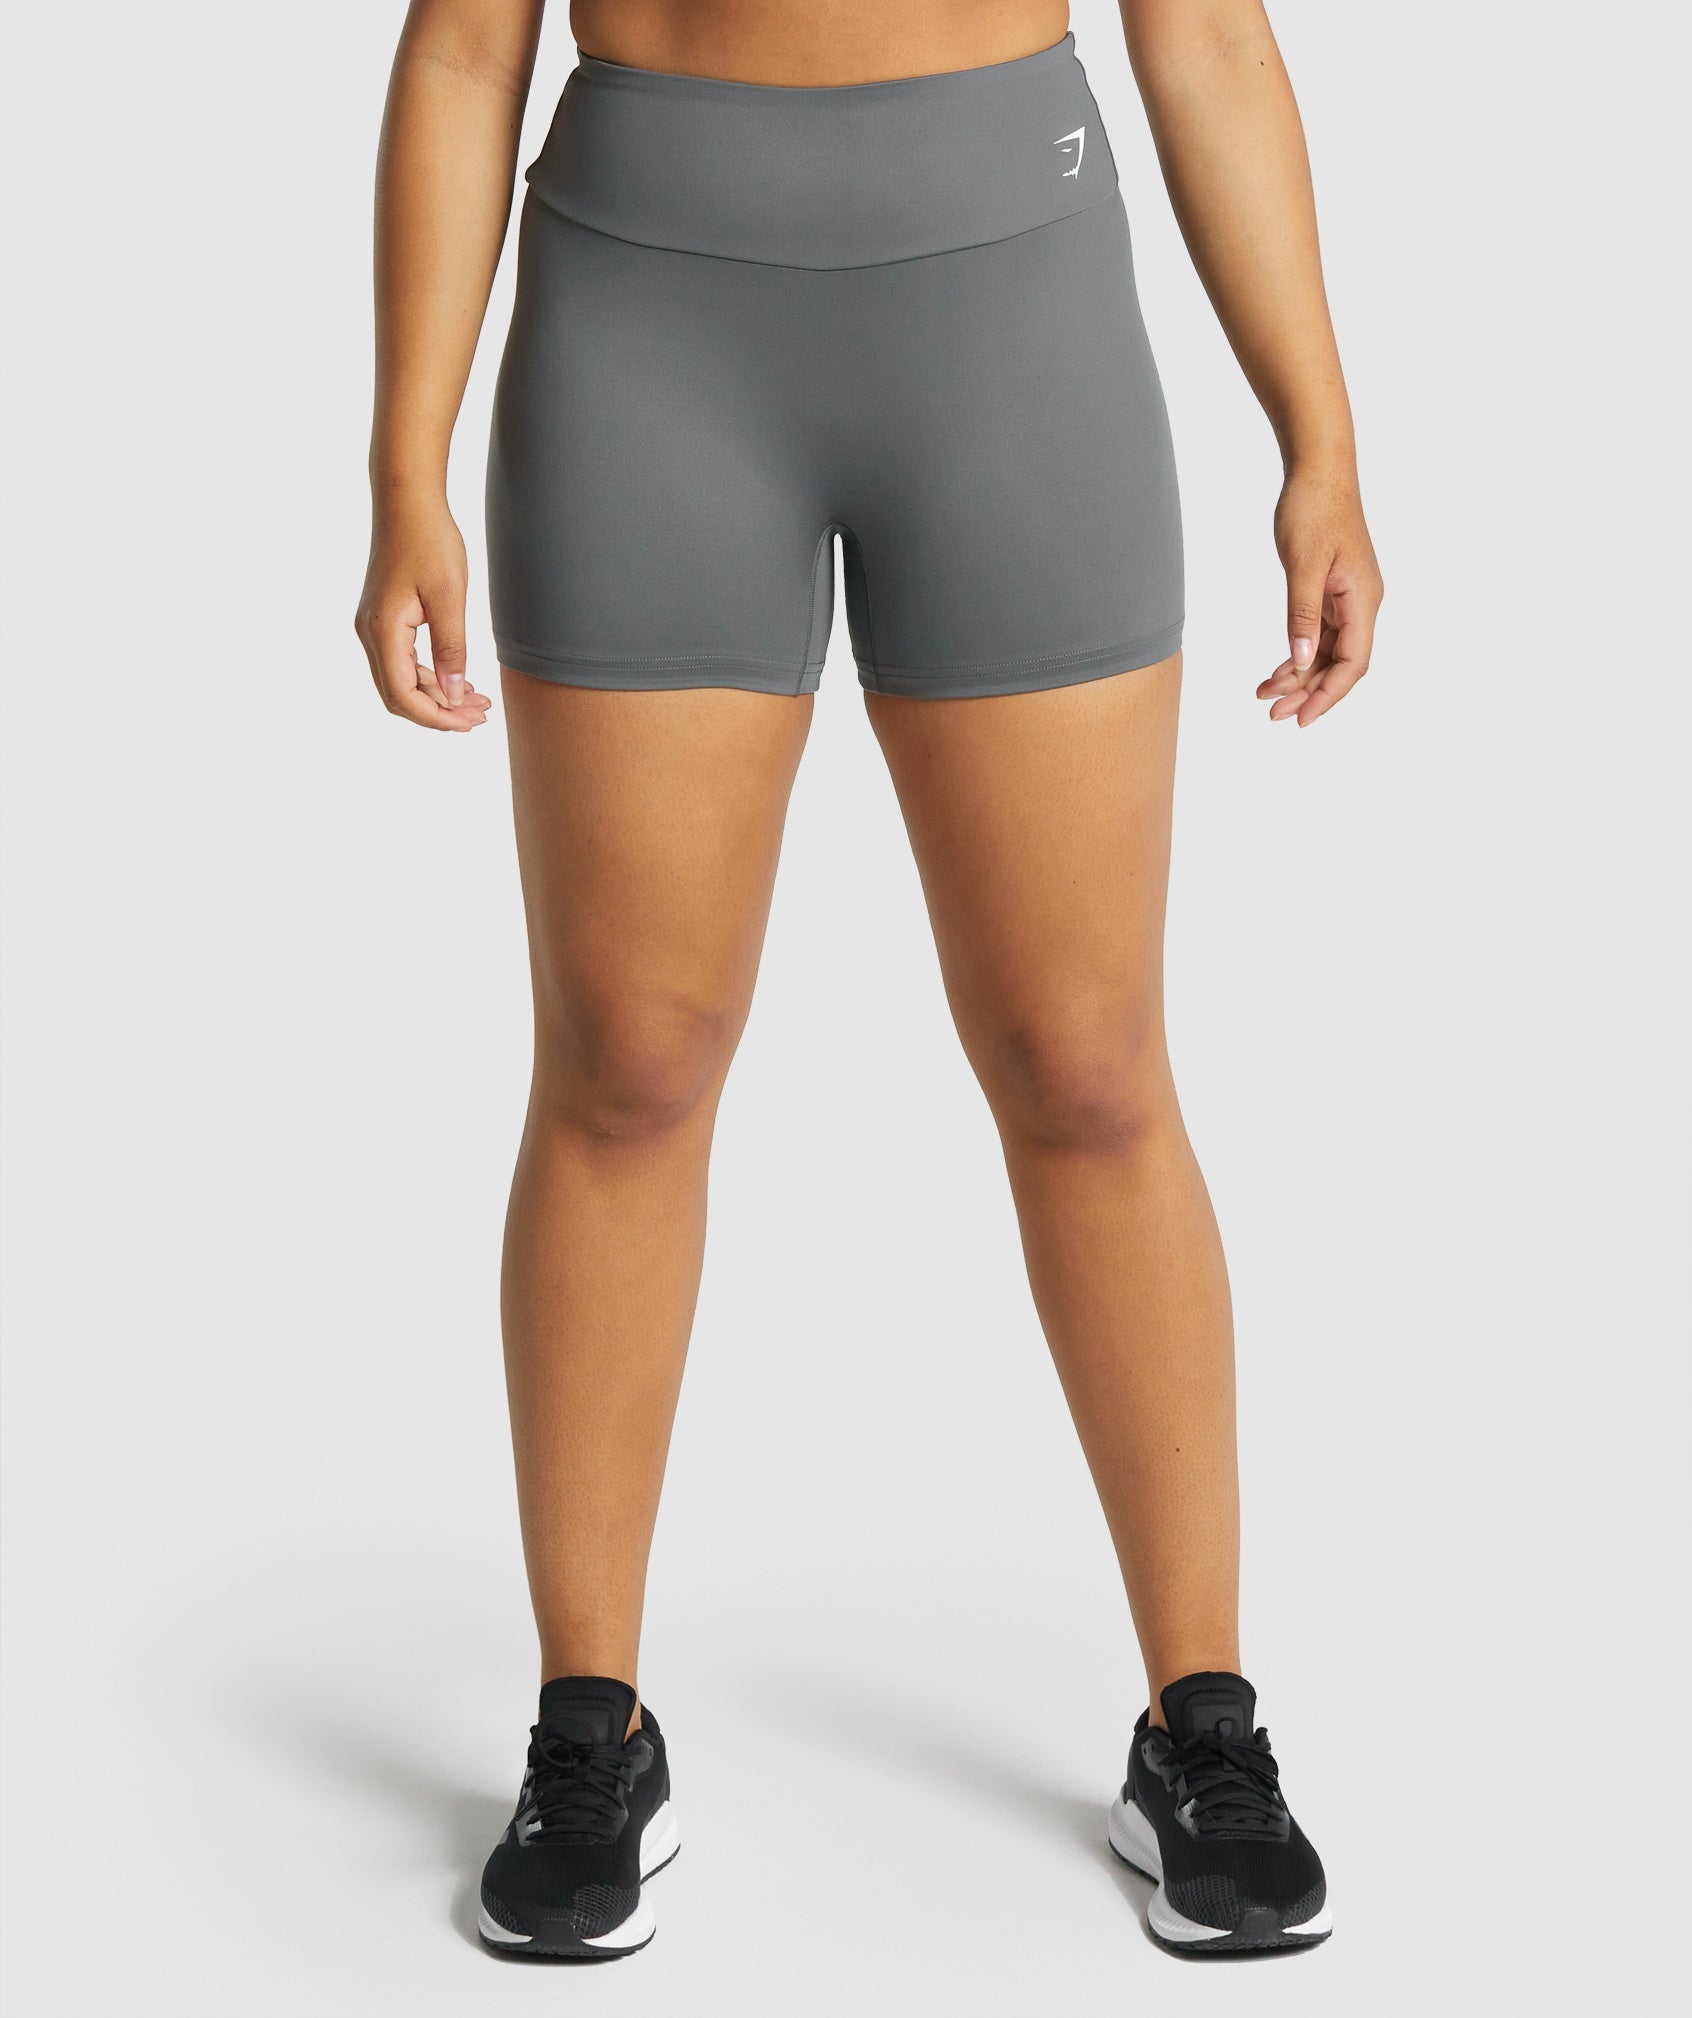 Seamless shorts PUSH UP MAX K077 dark grey MITARE Color Grey Size XS